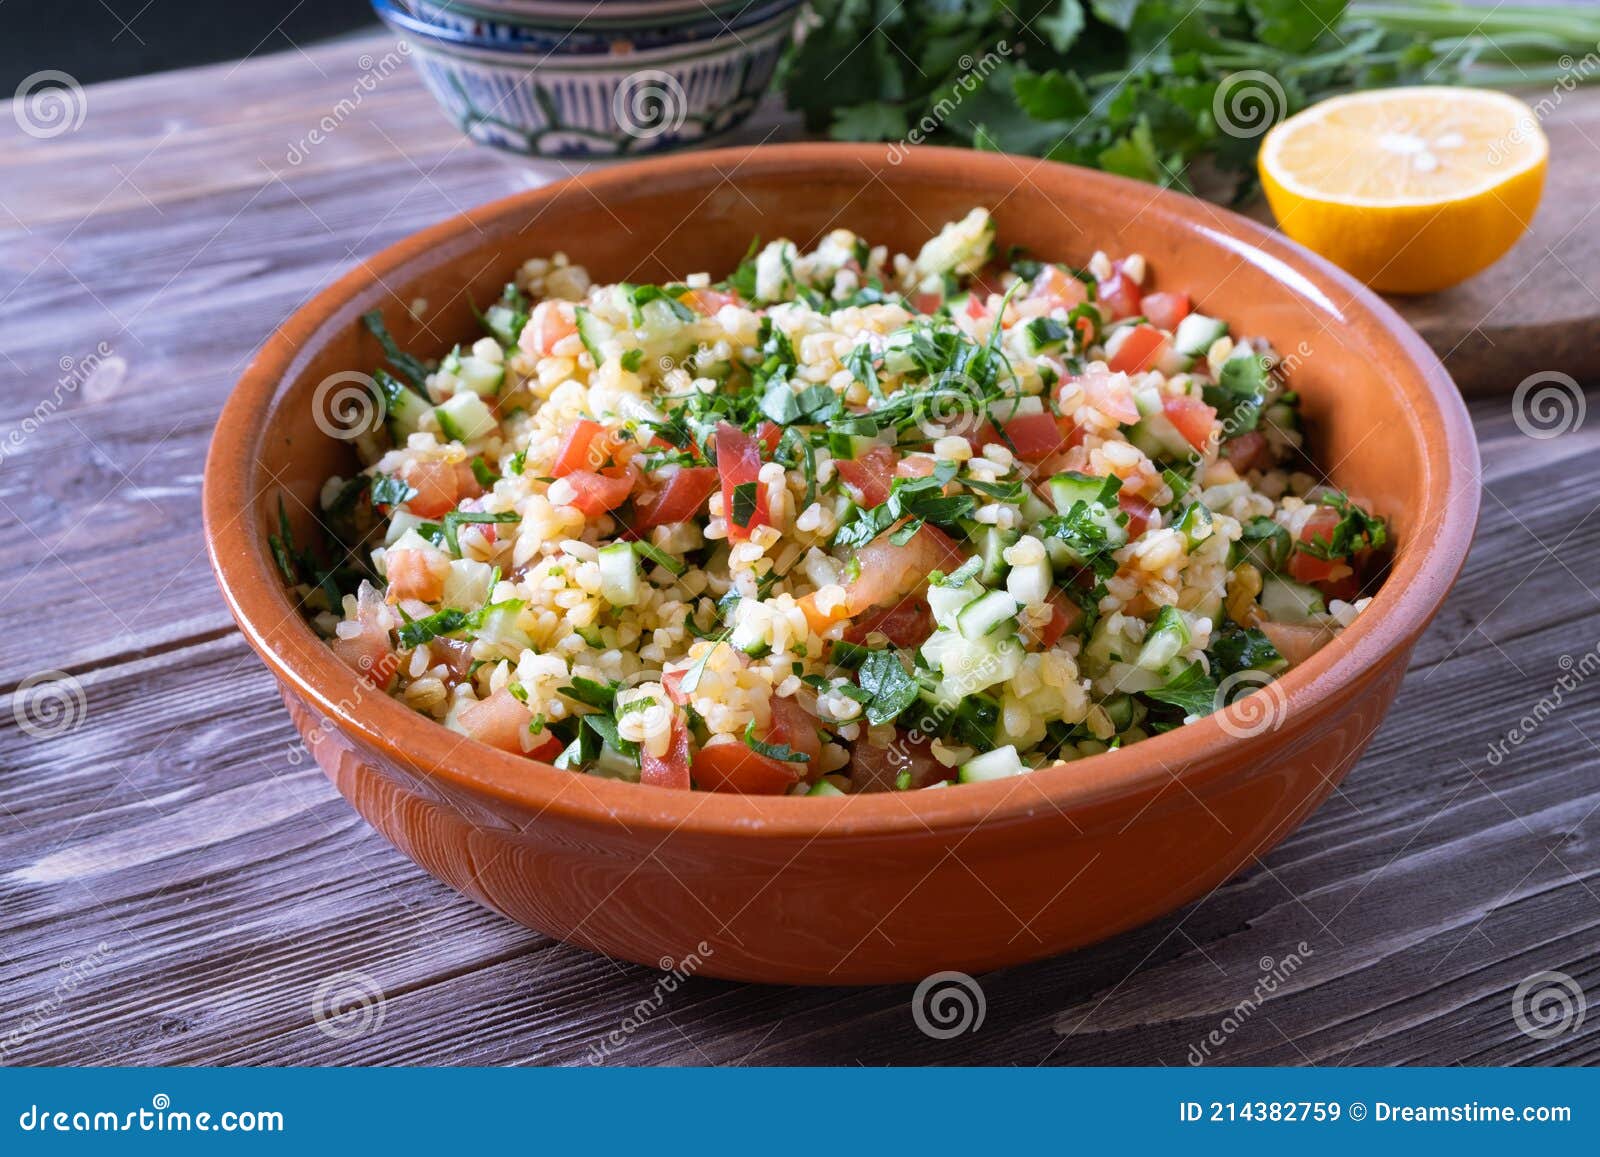 tabouli salad or tabule, tabbouleh - simple mediterranean salad with vegetables and bulgur.